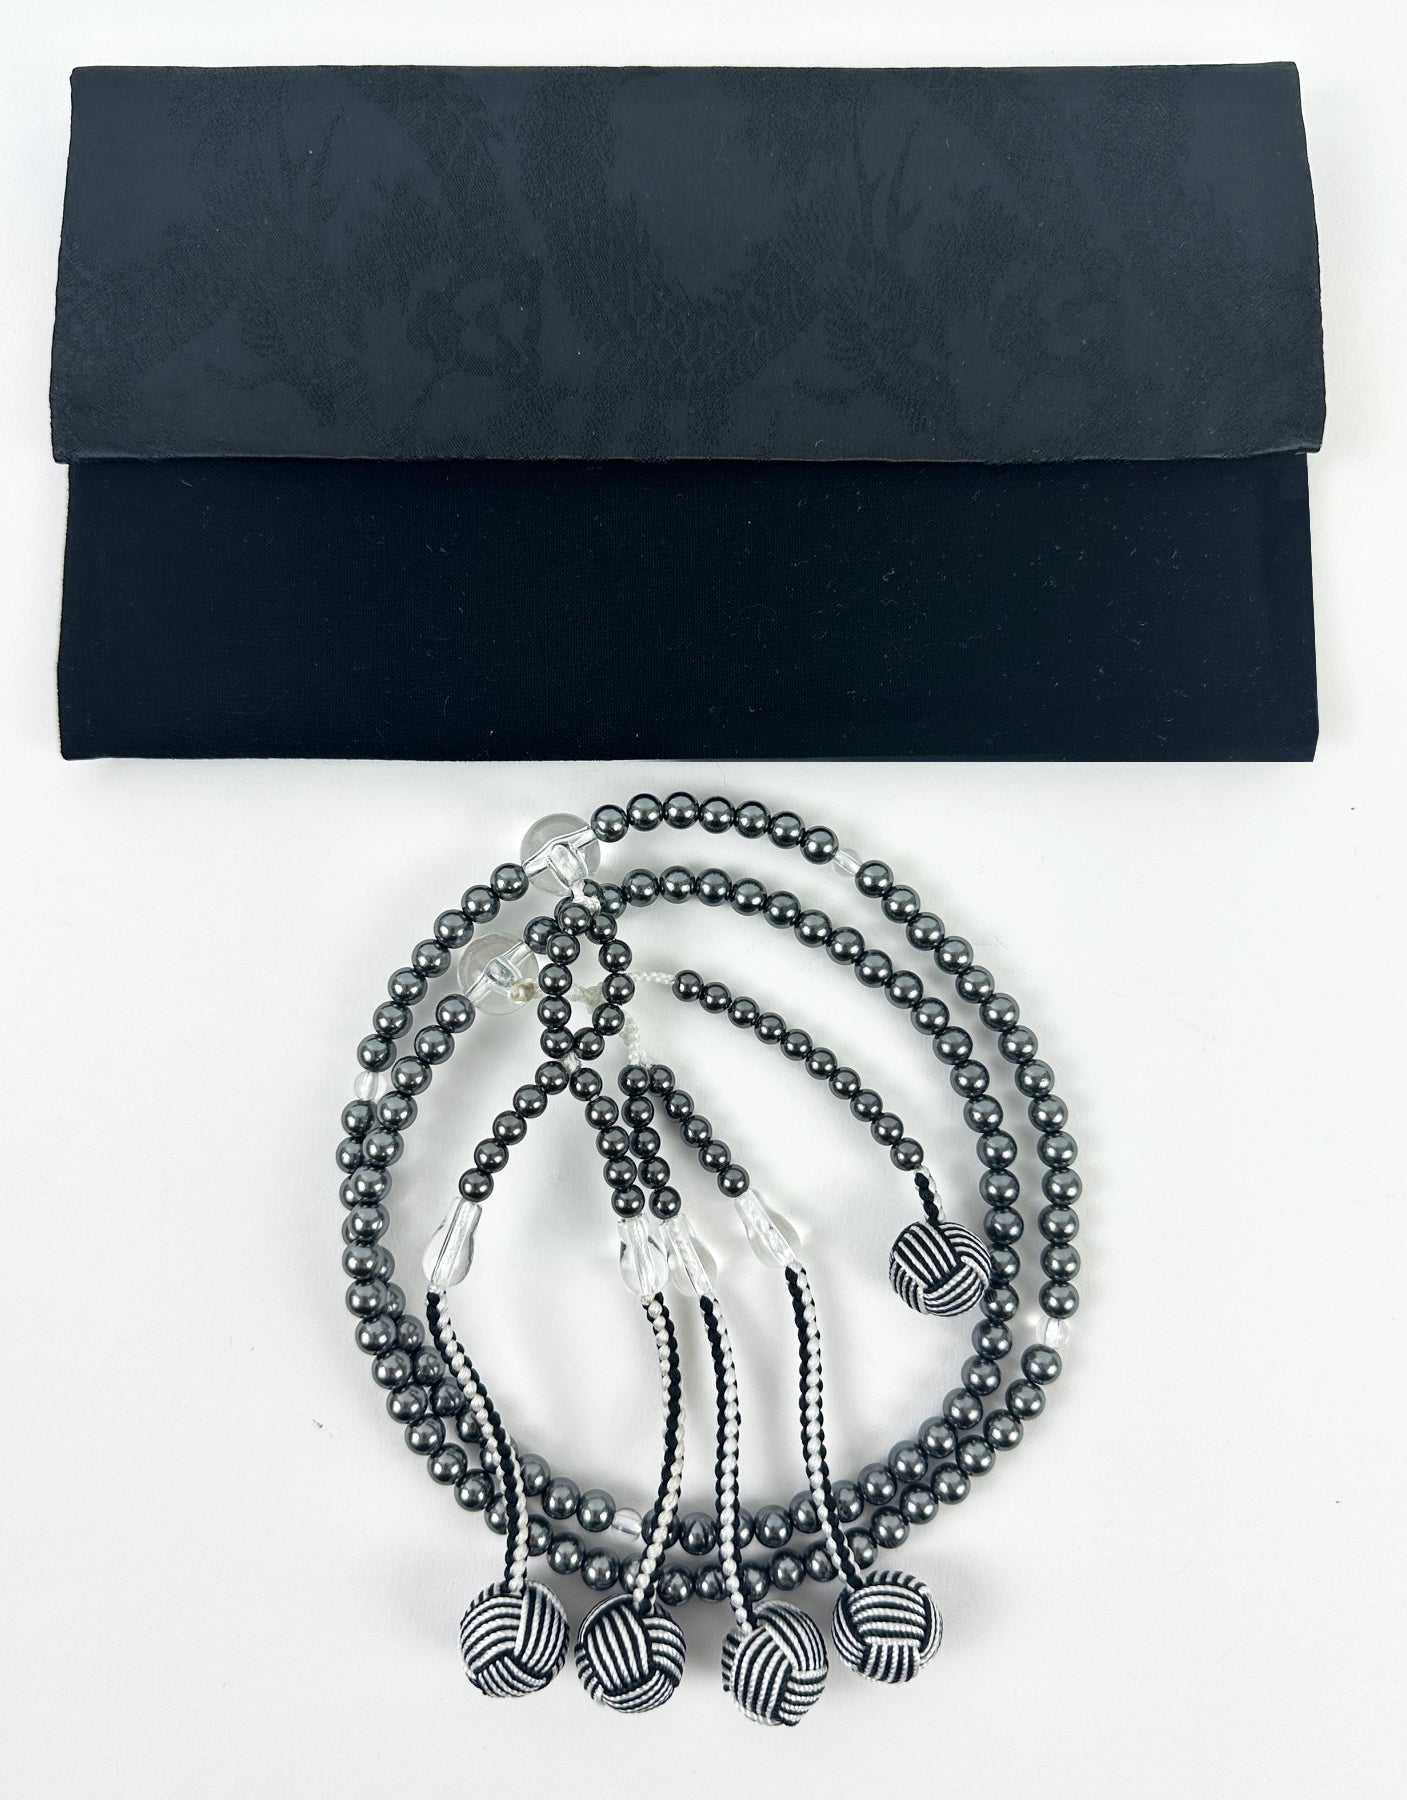 Black Beads Set - Large with Black Dragon Print Beads Case #10